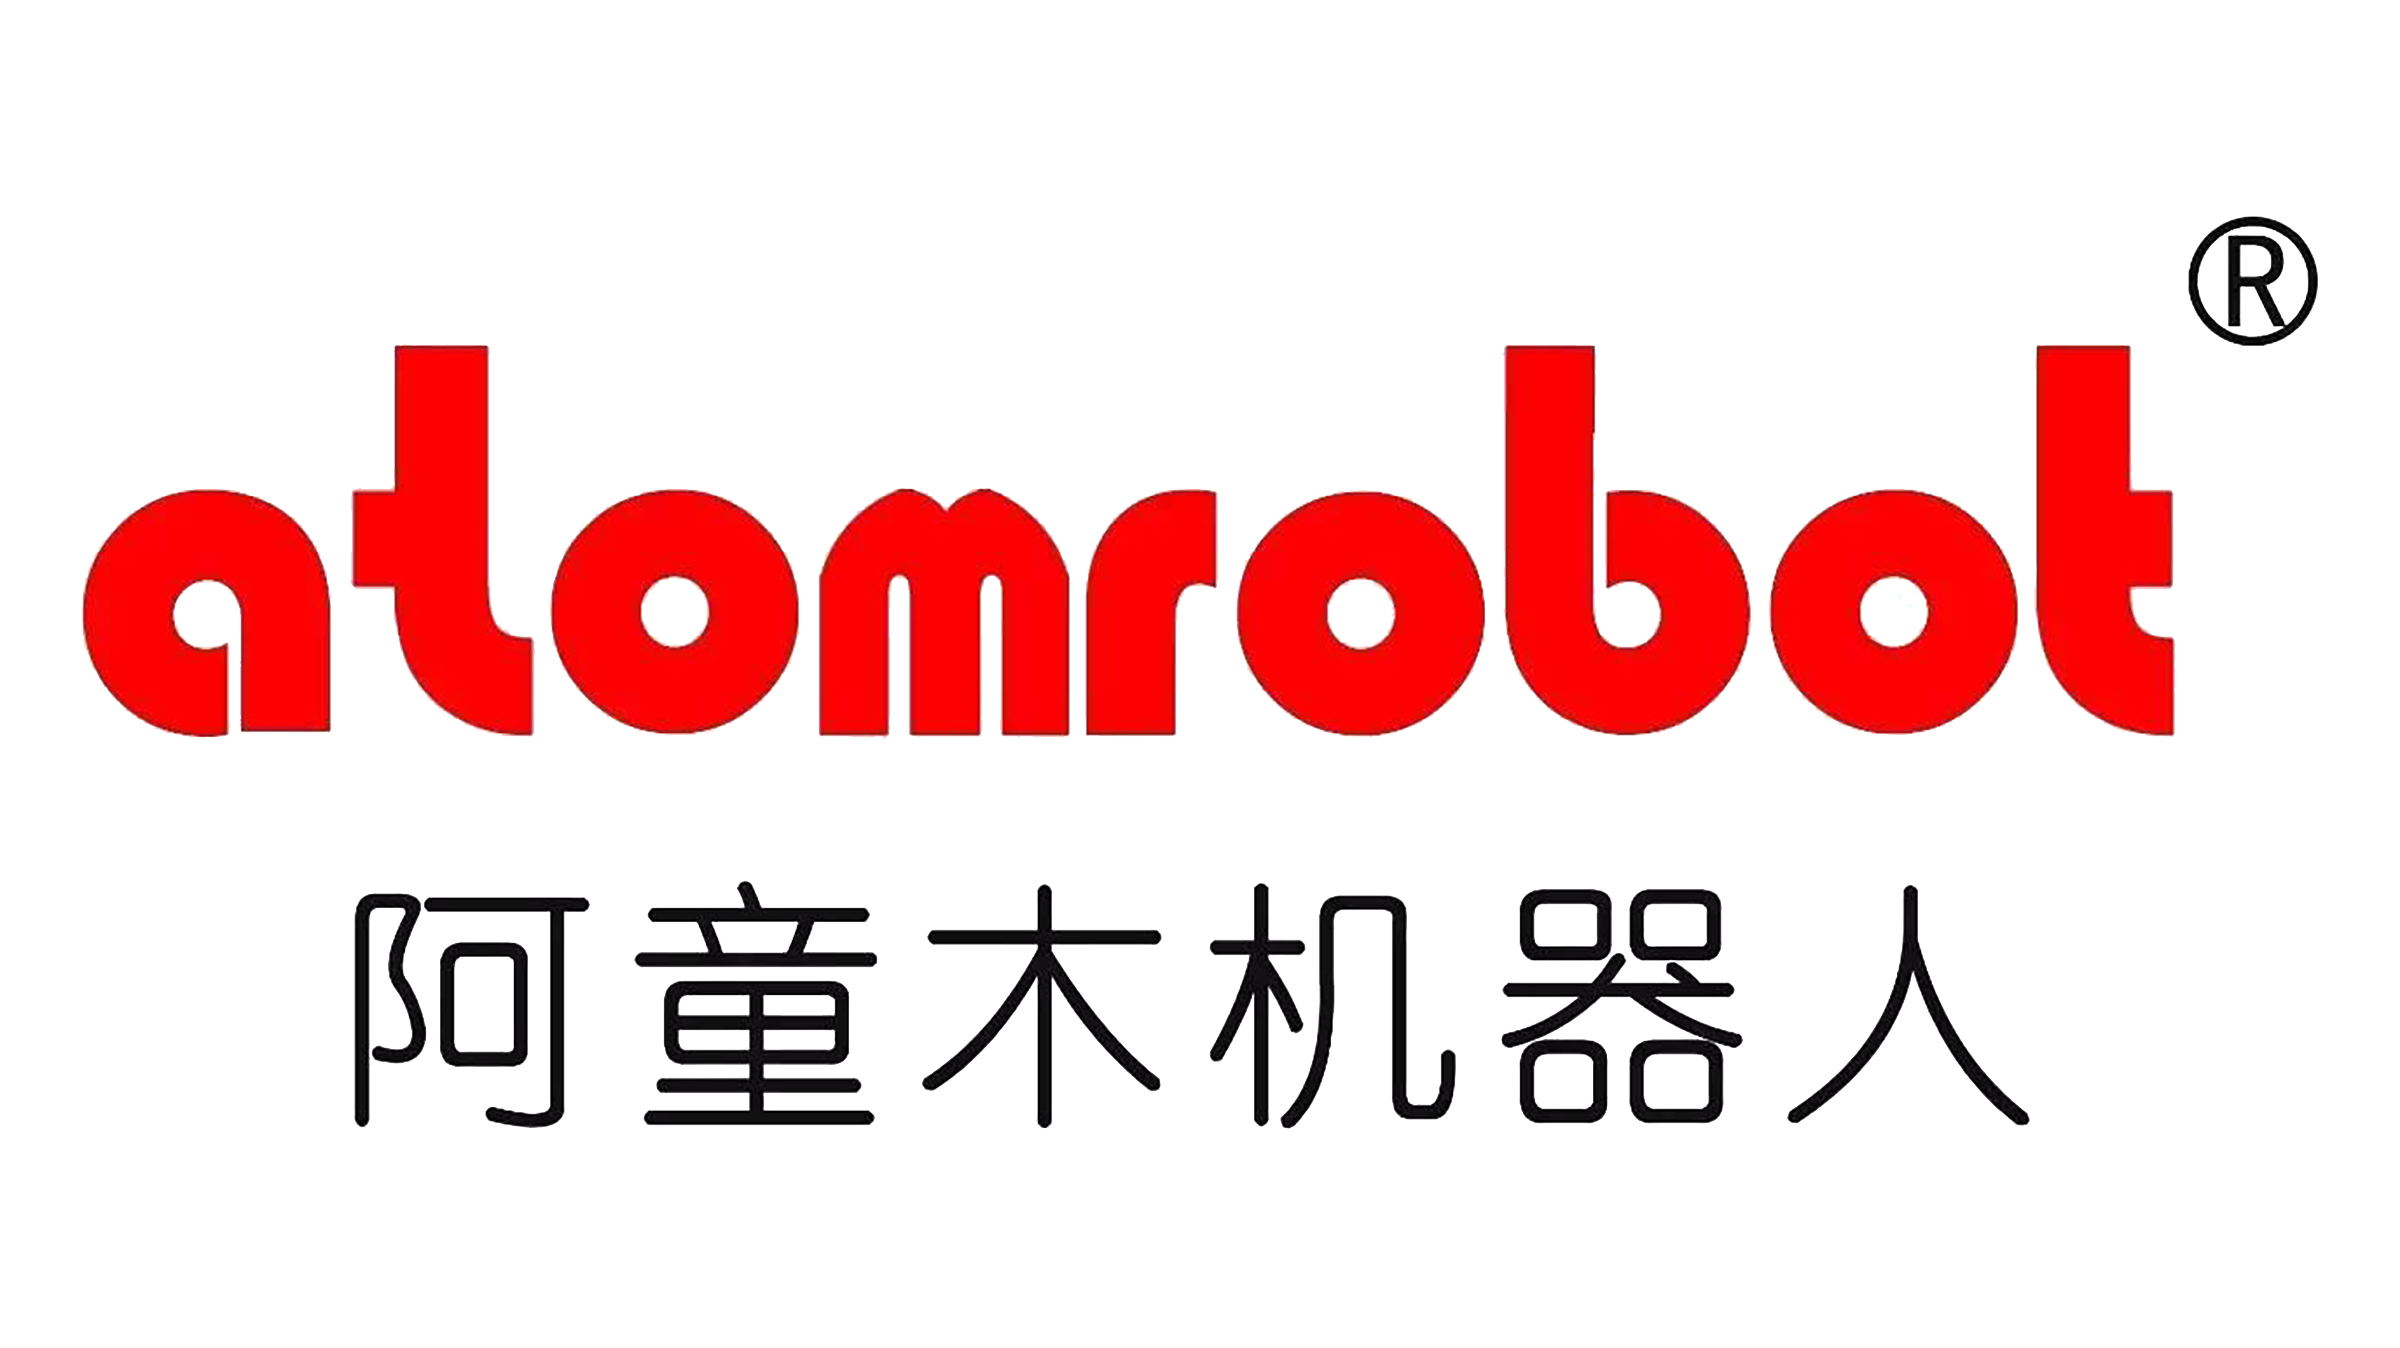 atomrobot logo